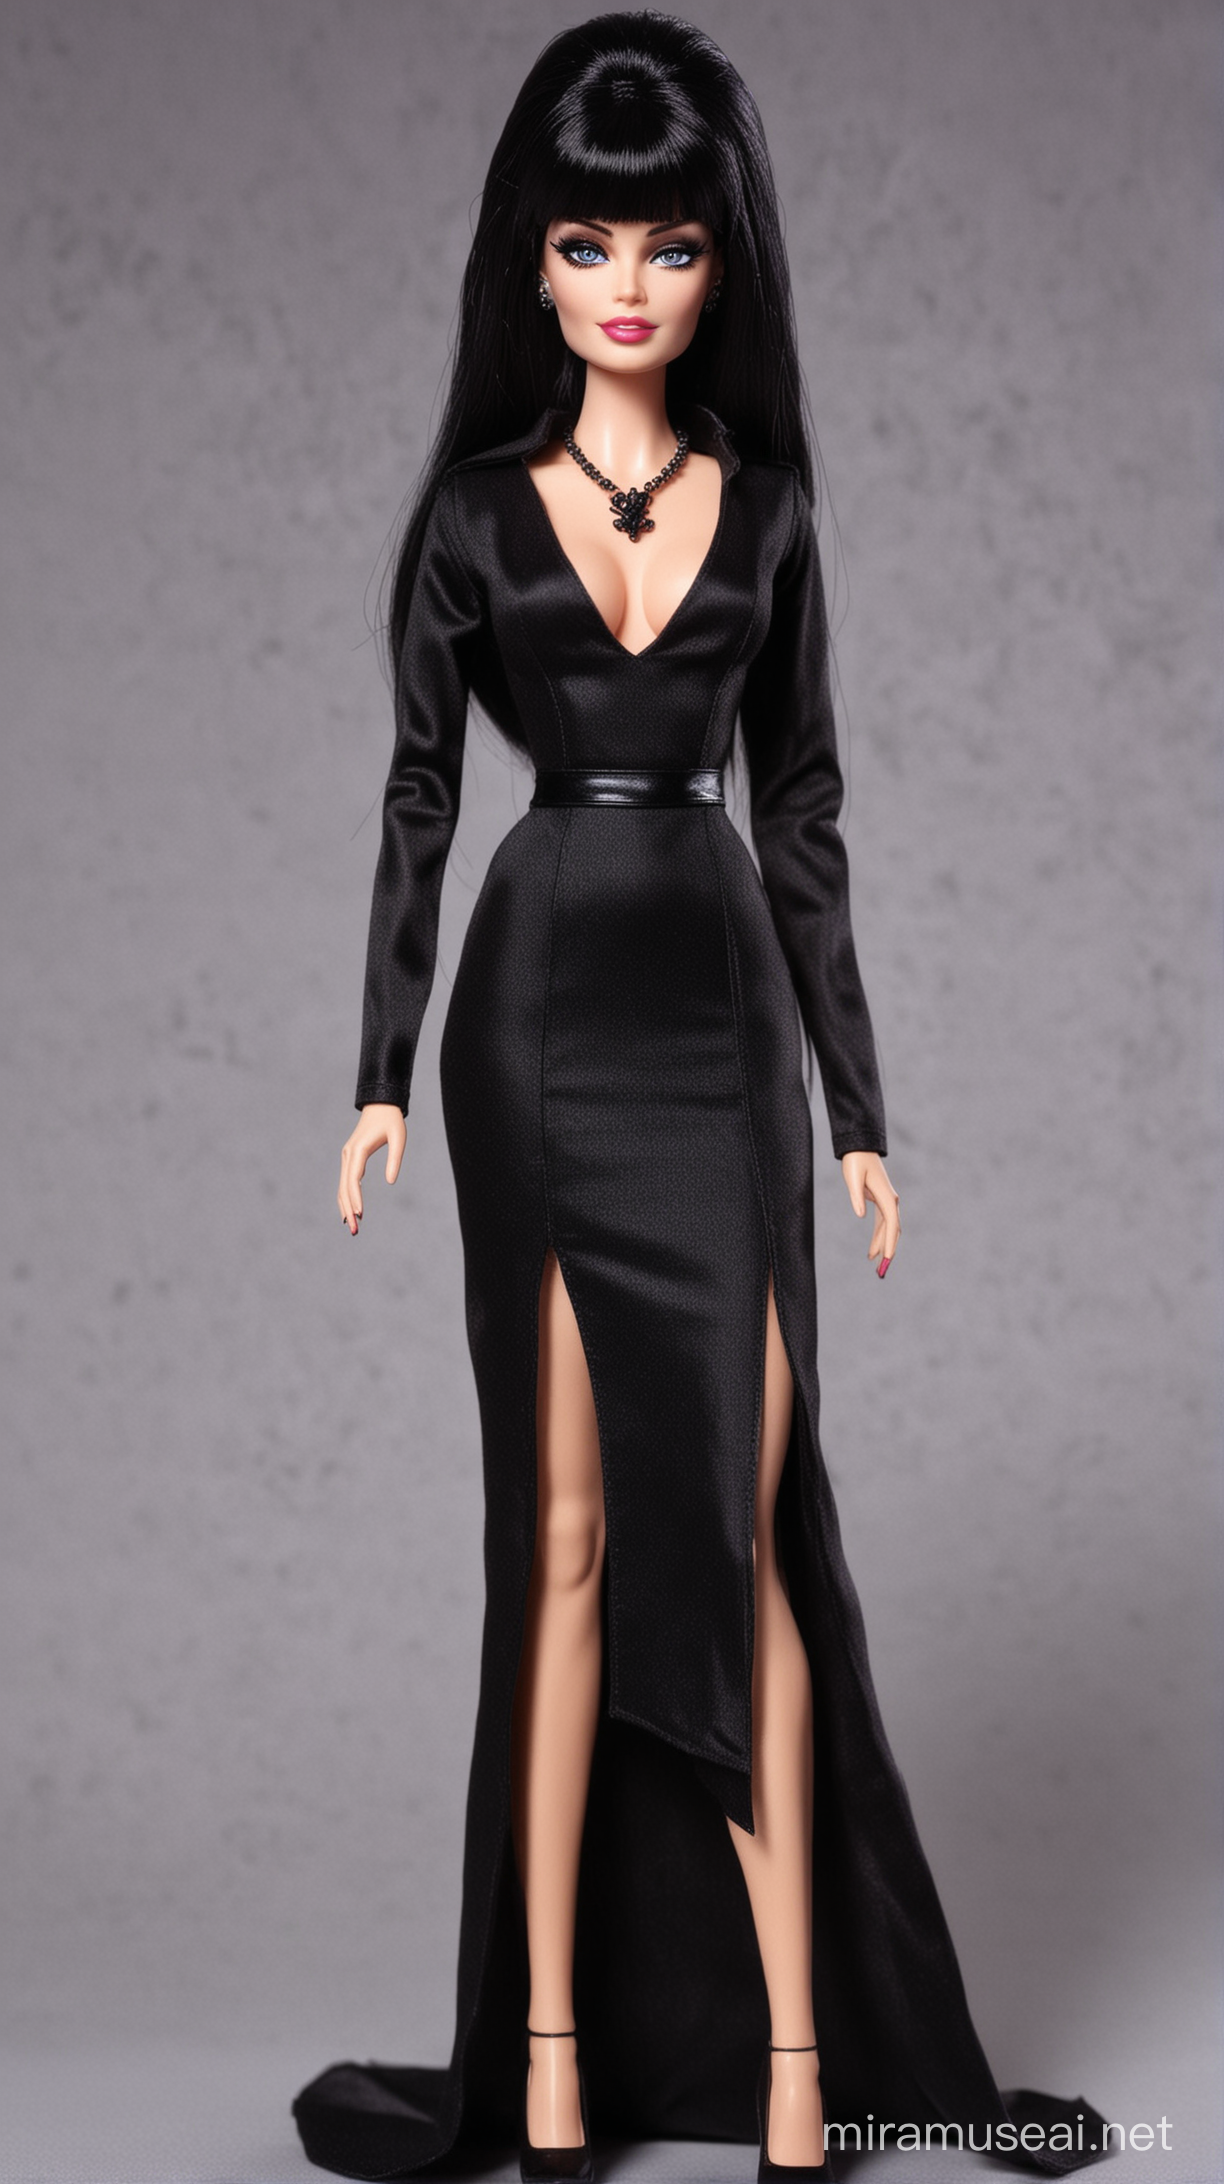 Barbie Version of Elvira Mistress of the Dark in Elegant Black Dress